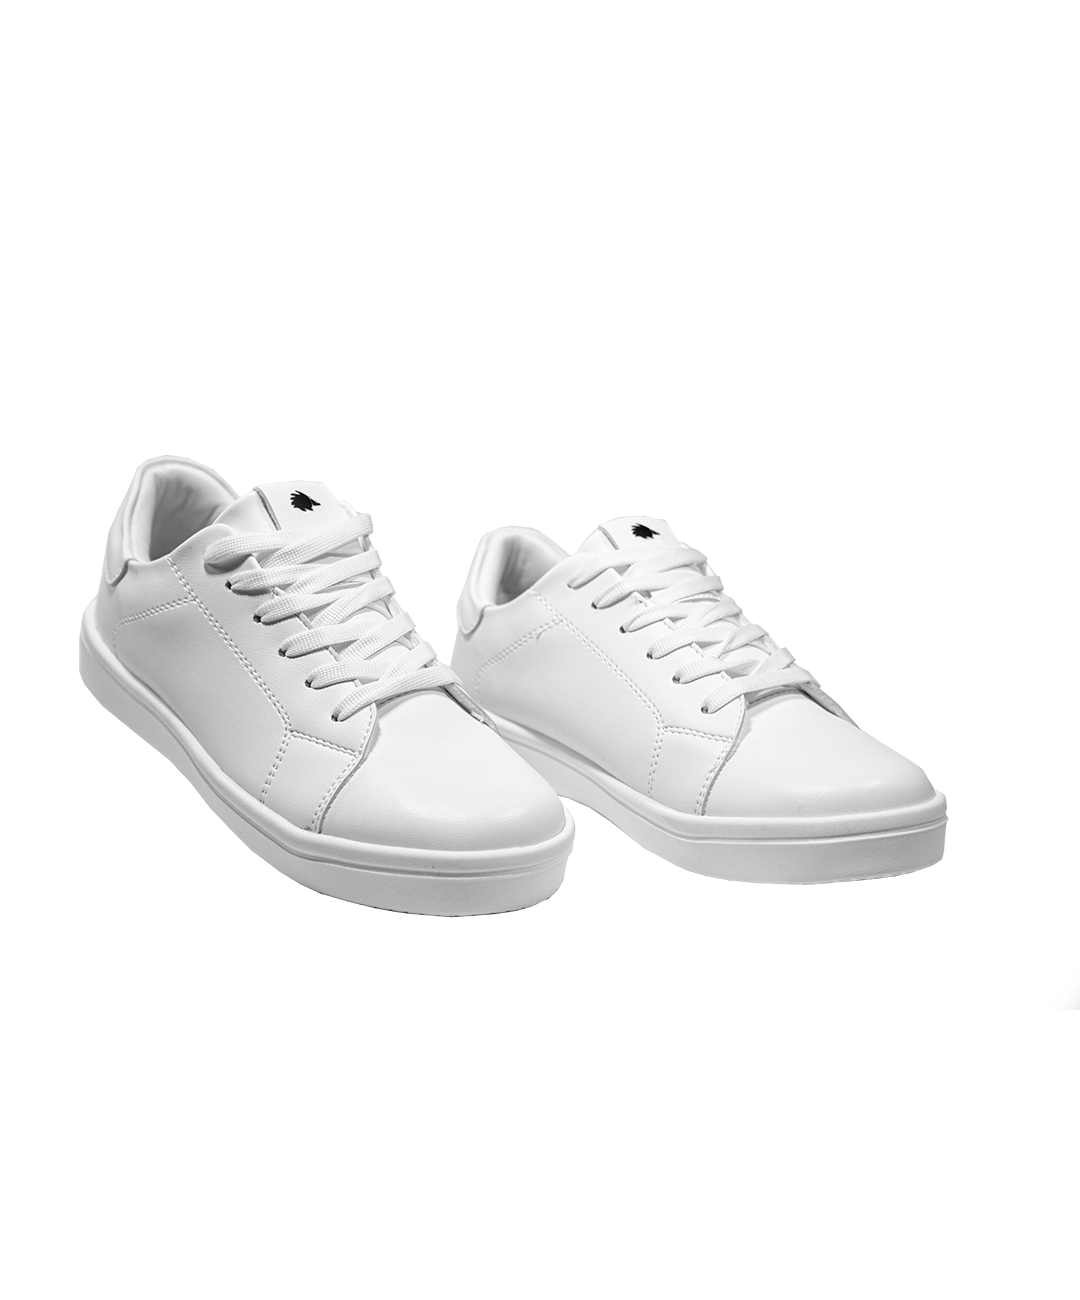 Zapato deportivo Blanco unisex